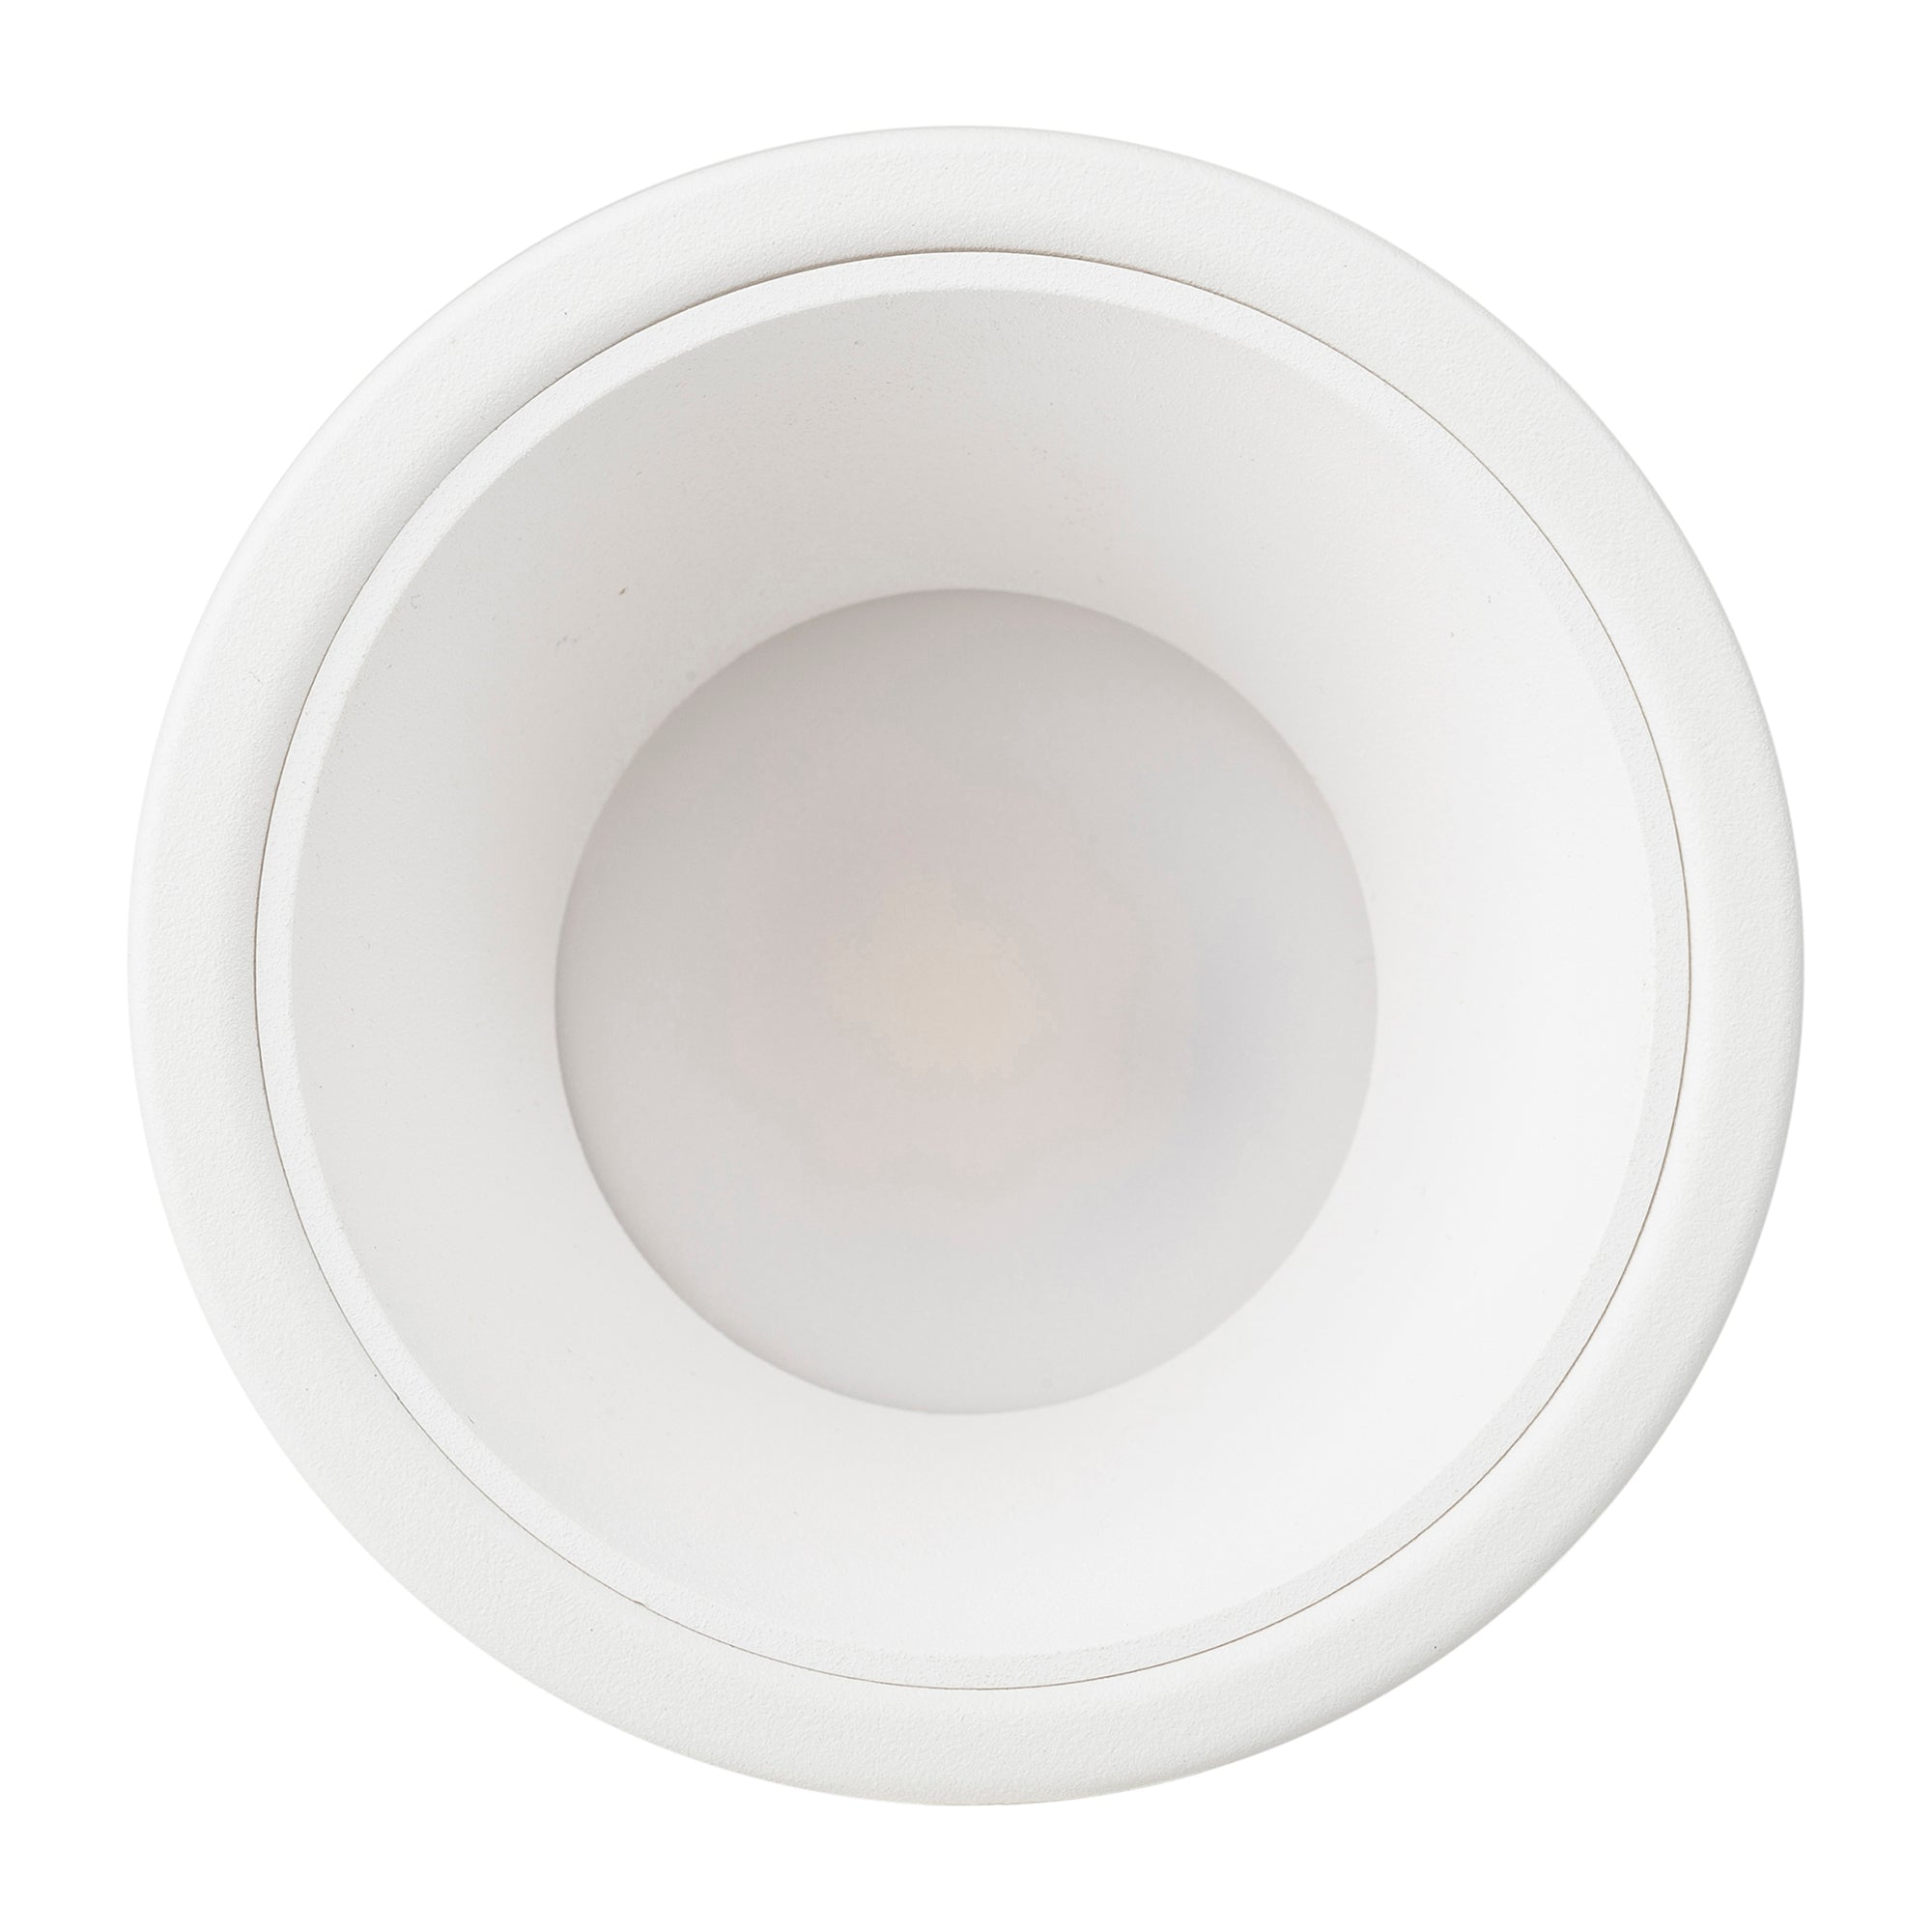 HV5529D2W-WW - Gleam White with White Insert Fixed Dim to Warm LED Downlight